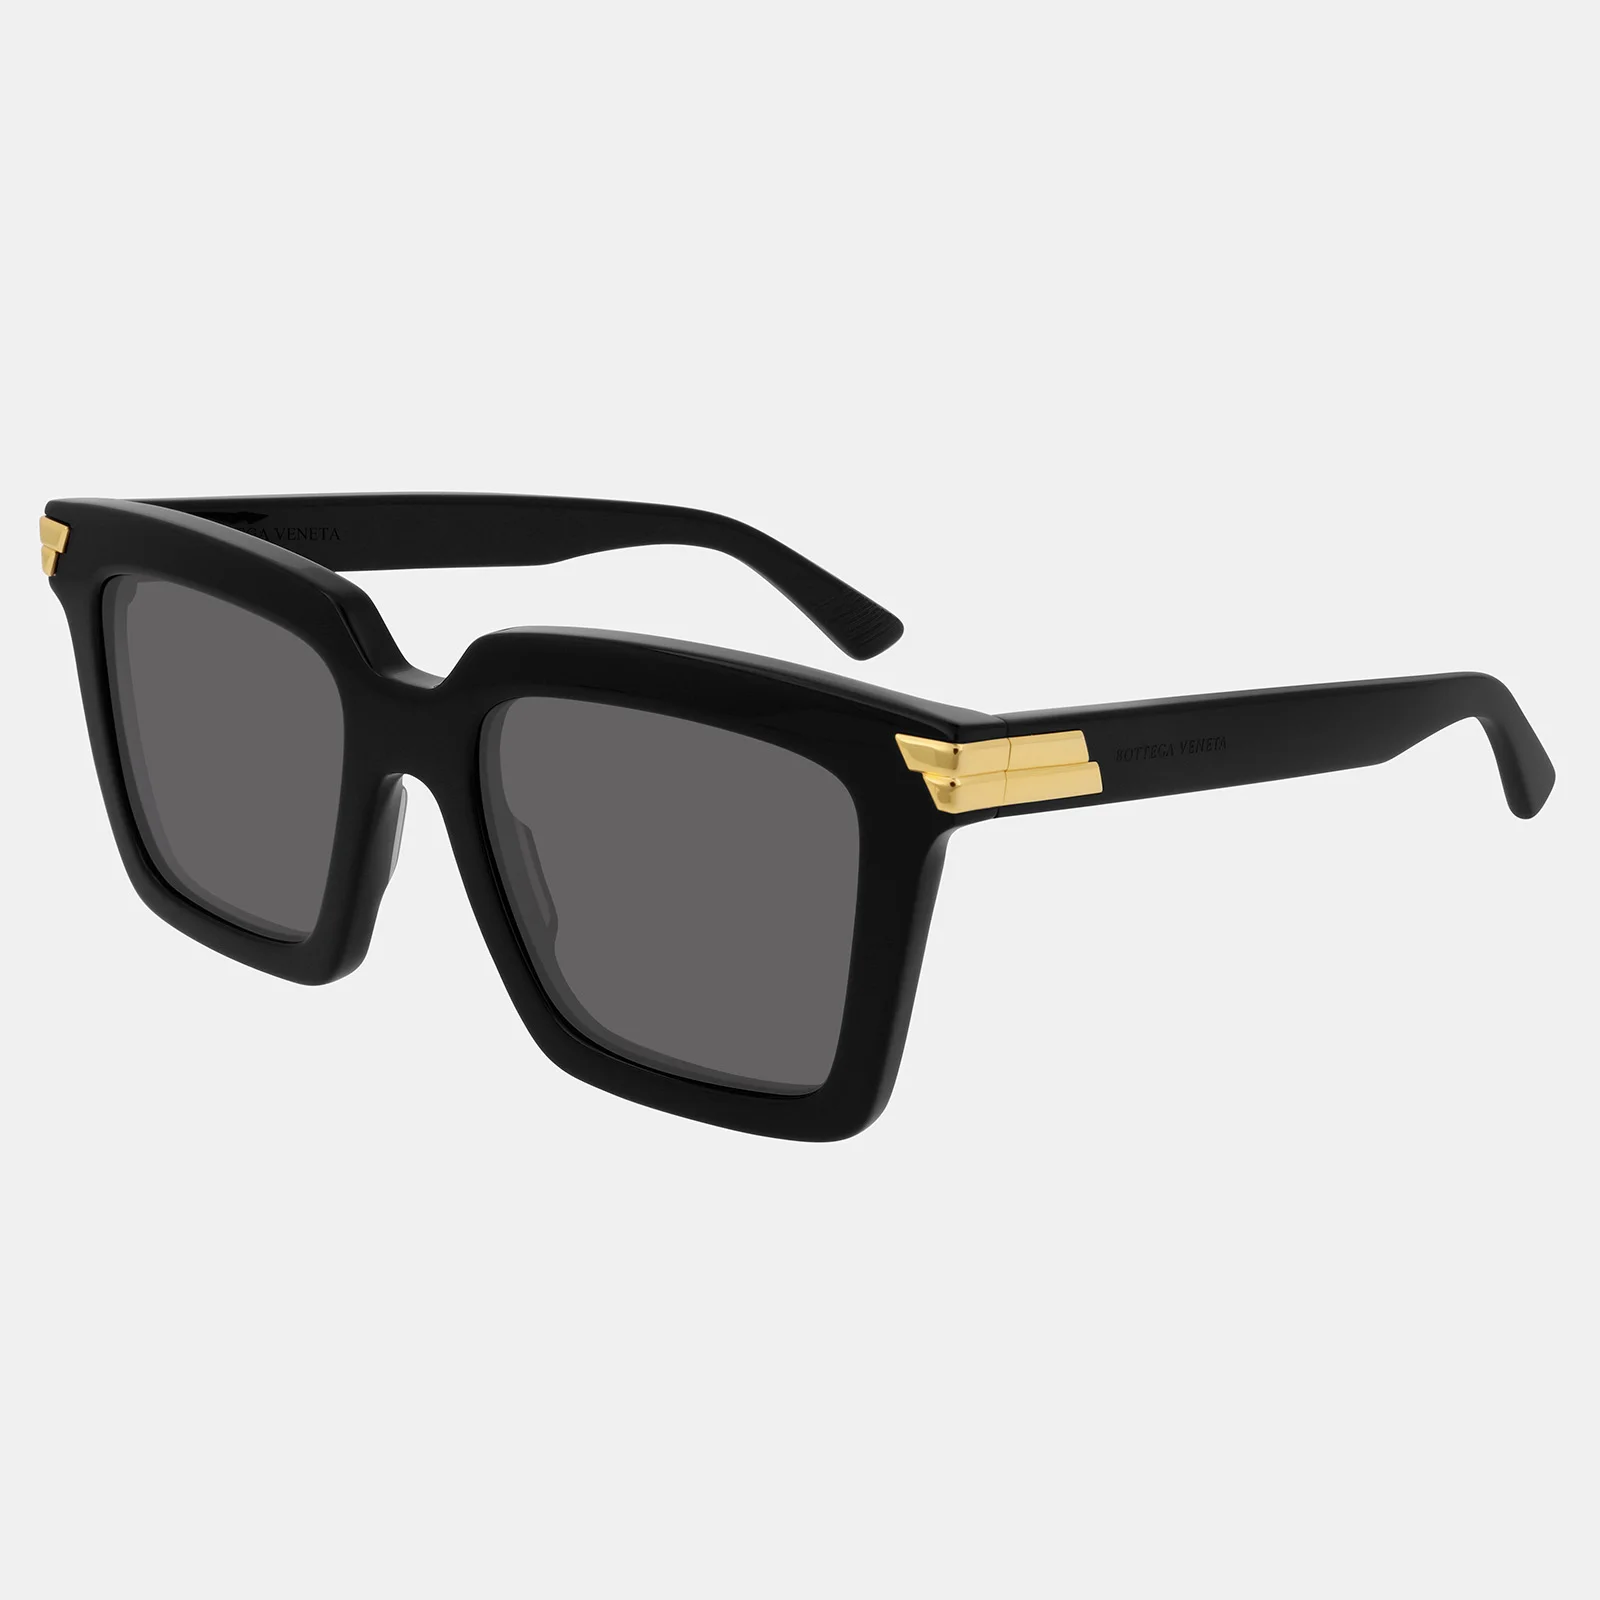 Bottega Veneta Women's Square Acetate Sunglasses - Black/Grey Image 1